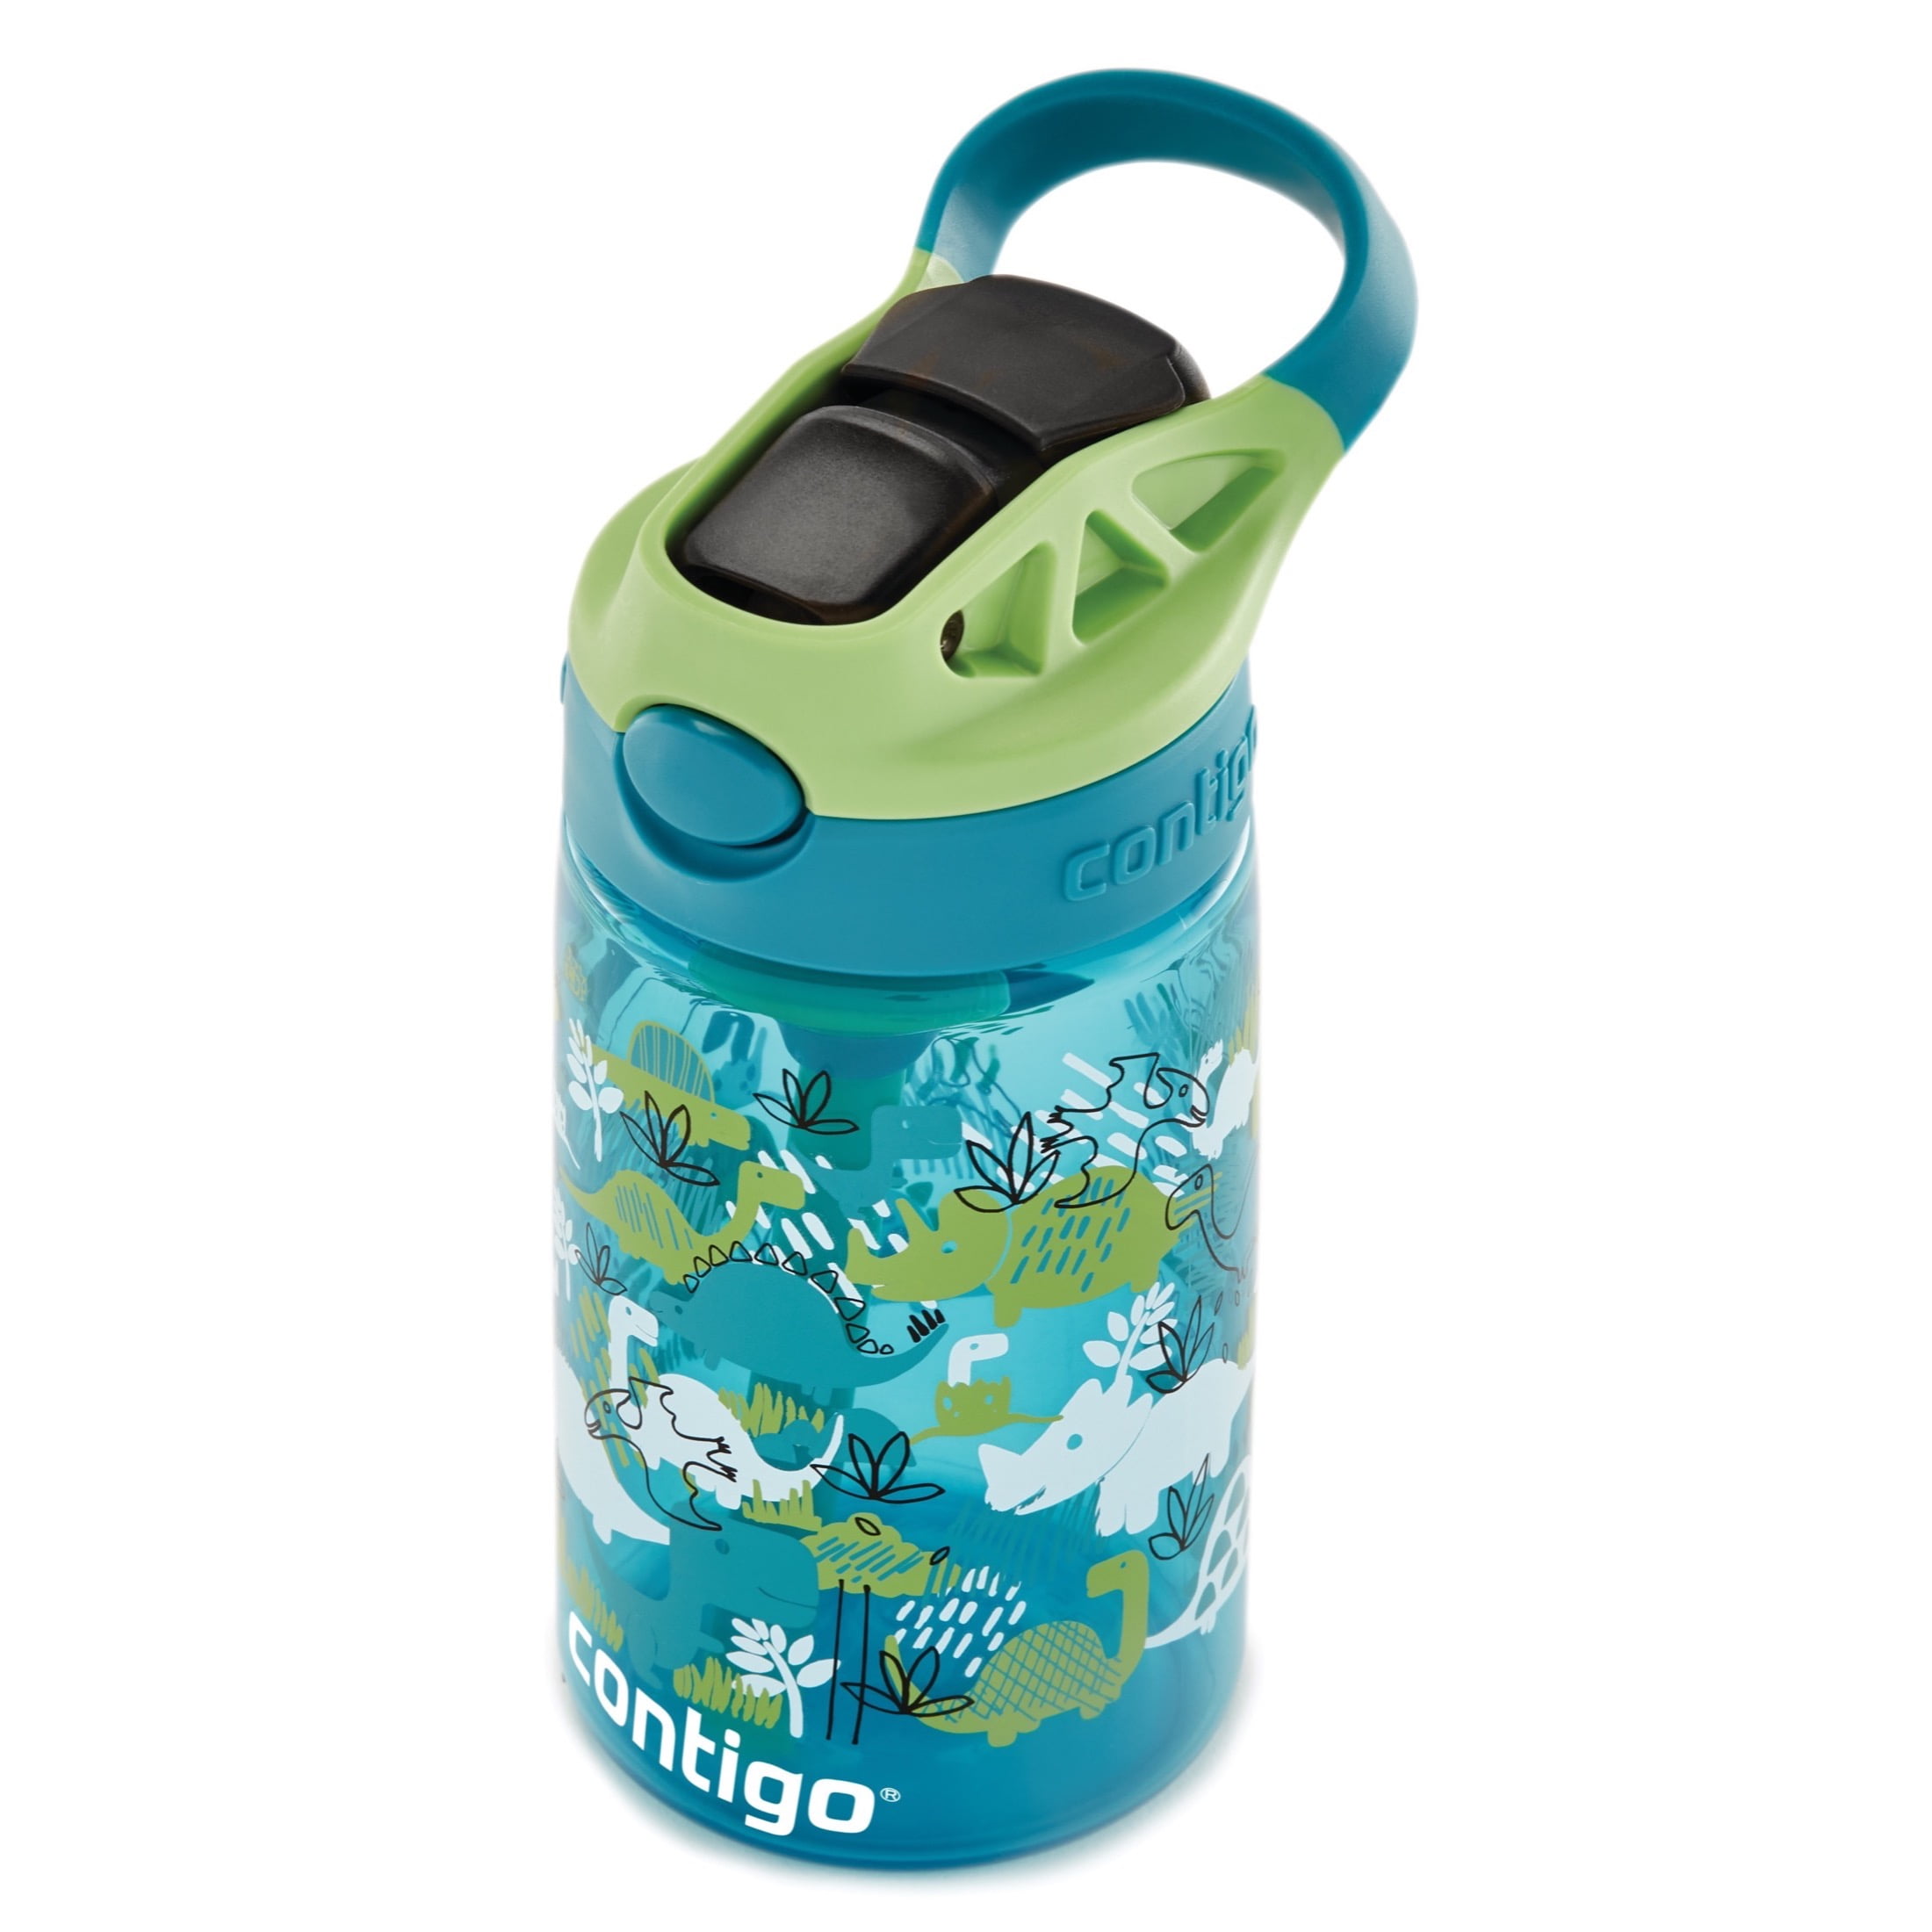 Contigo Kid's 14 oz Autospout Straw Water Bottle - Blue Raspberry Punch Fox